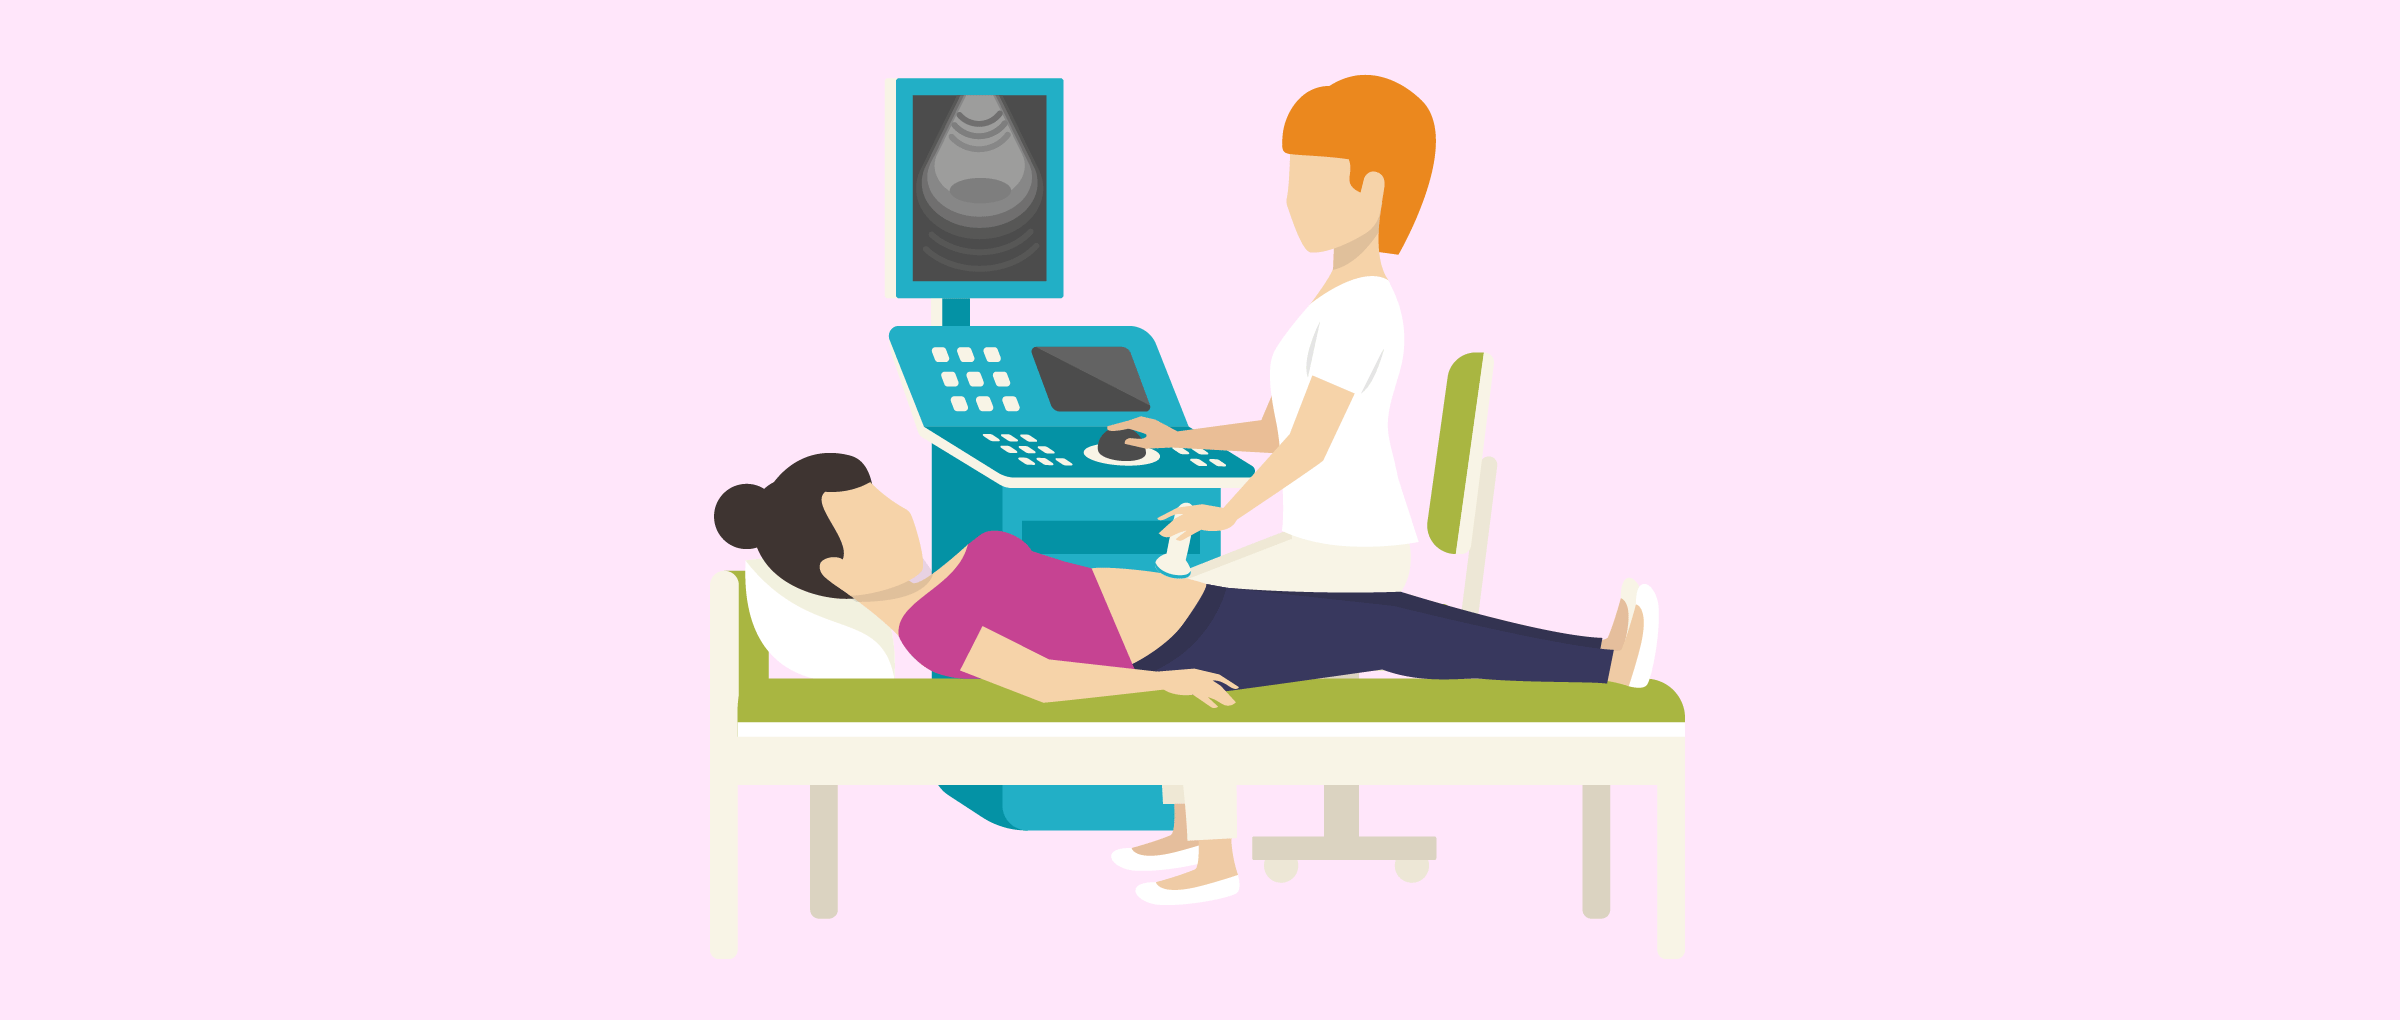 Ultraschall zur Untersuchung der Geschlechtsorgane